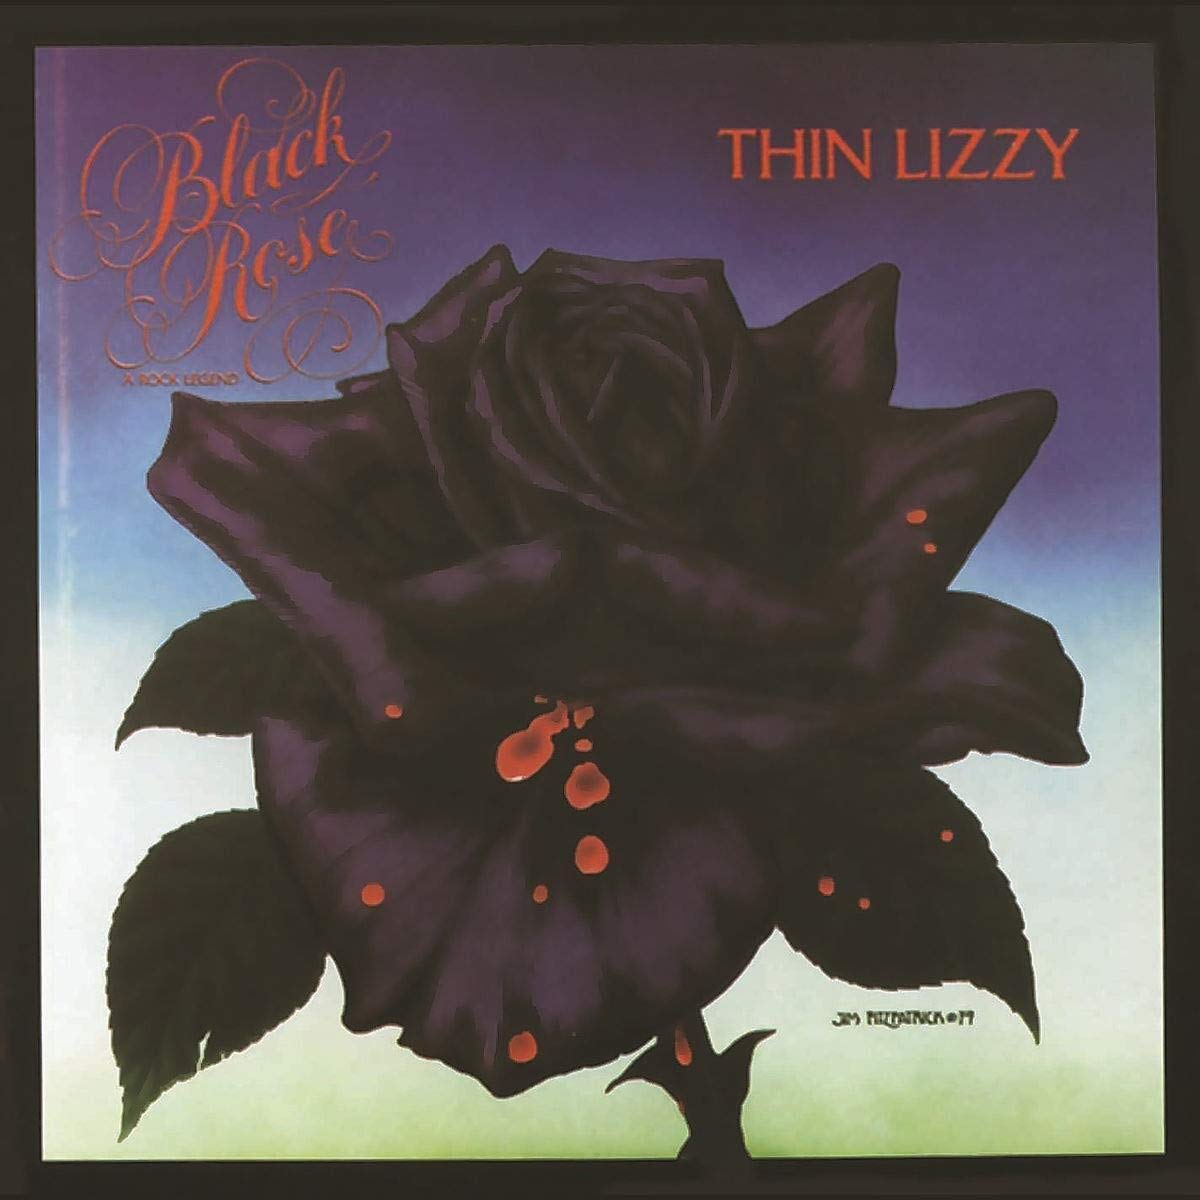 Thin Lizzy - Black Rose: A Rock Legend (Import) (LP)